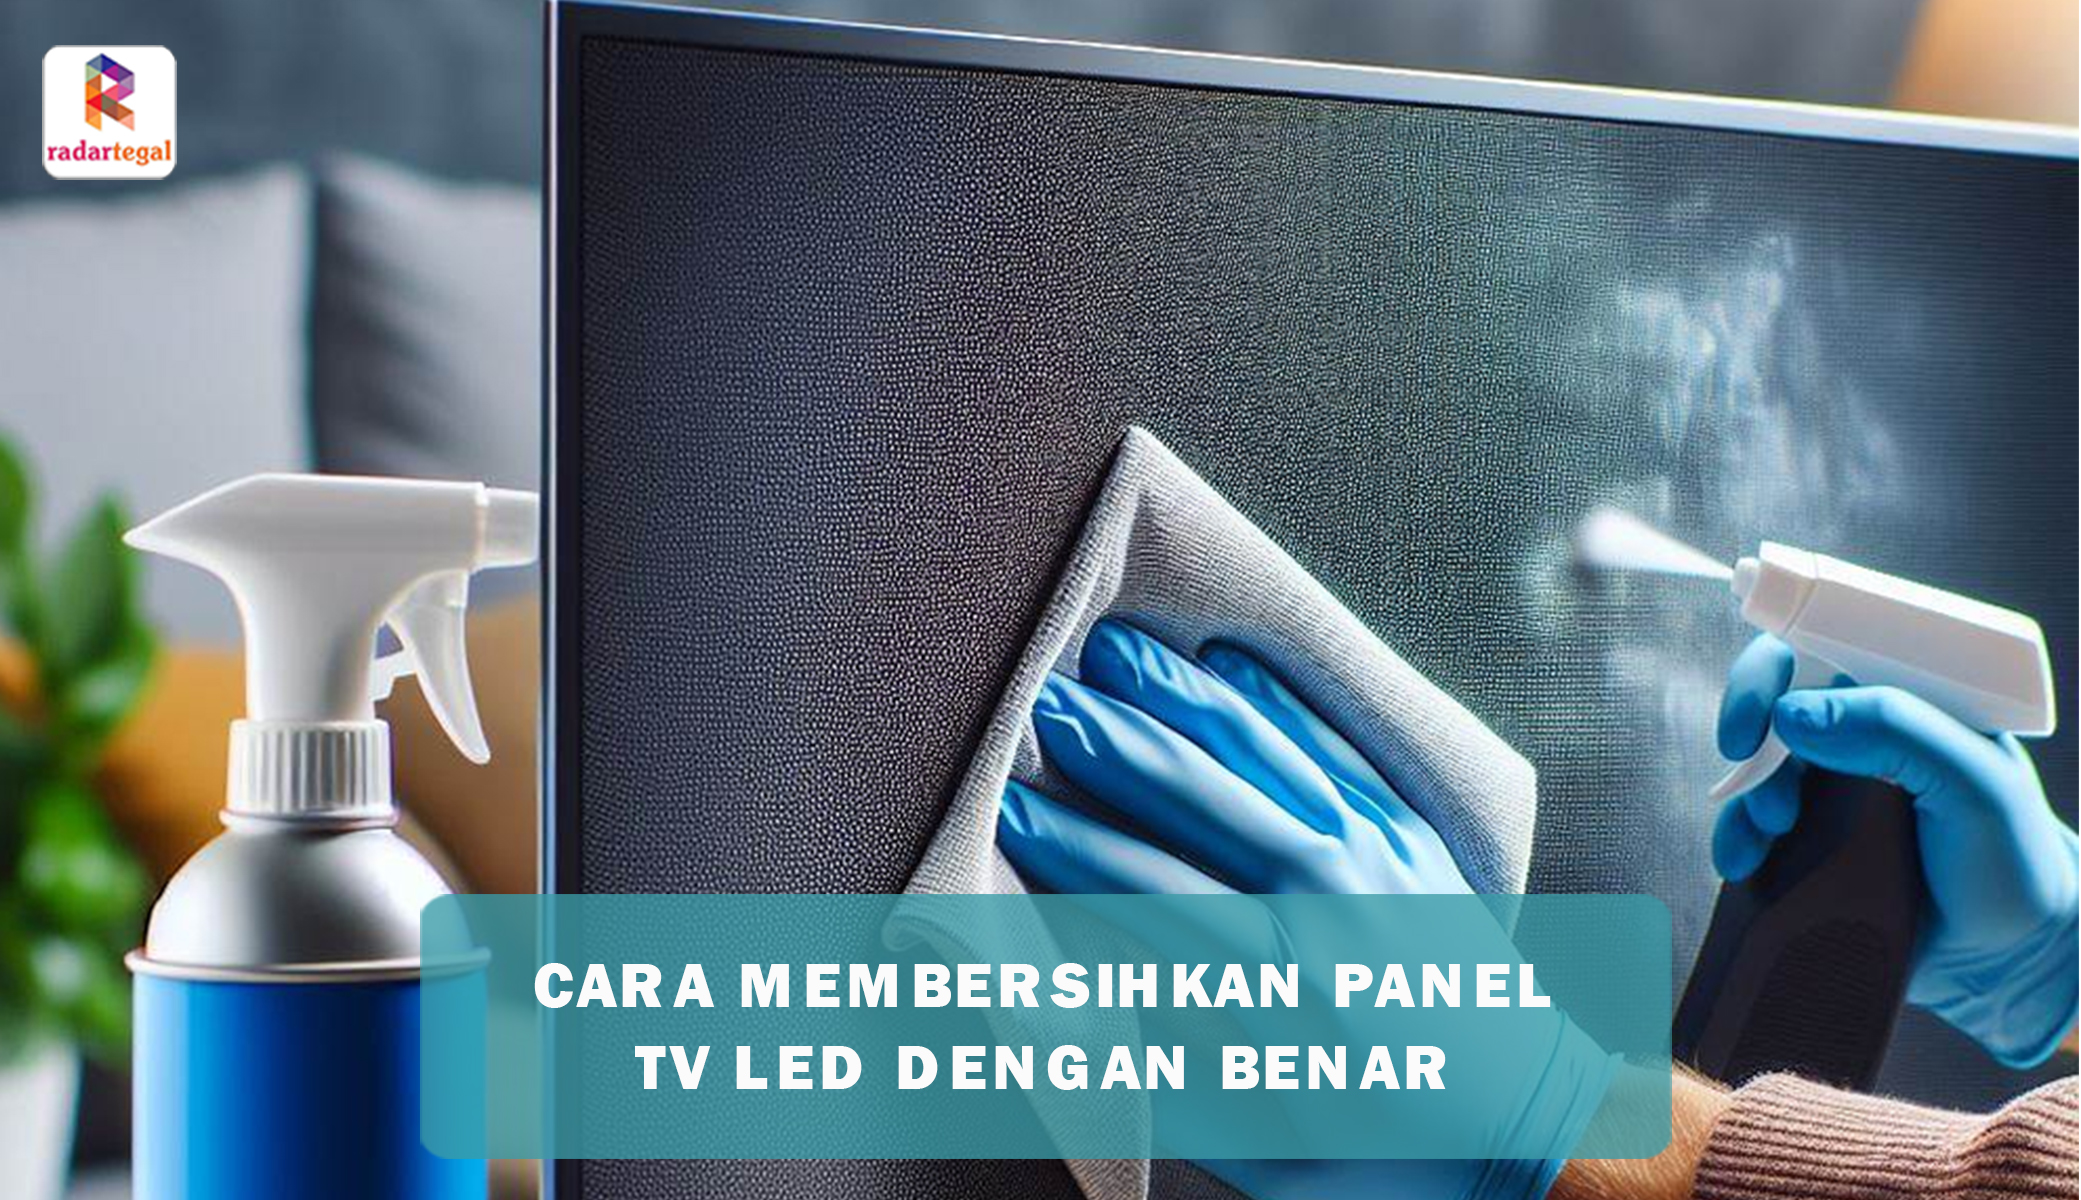 Jangan Asal Ngelap, Begini Cara Membersihkan Panel TV LED dengan Benar